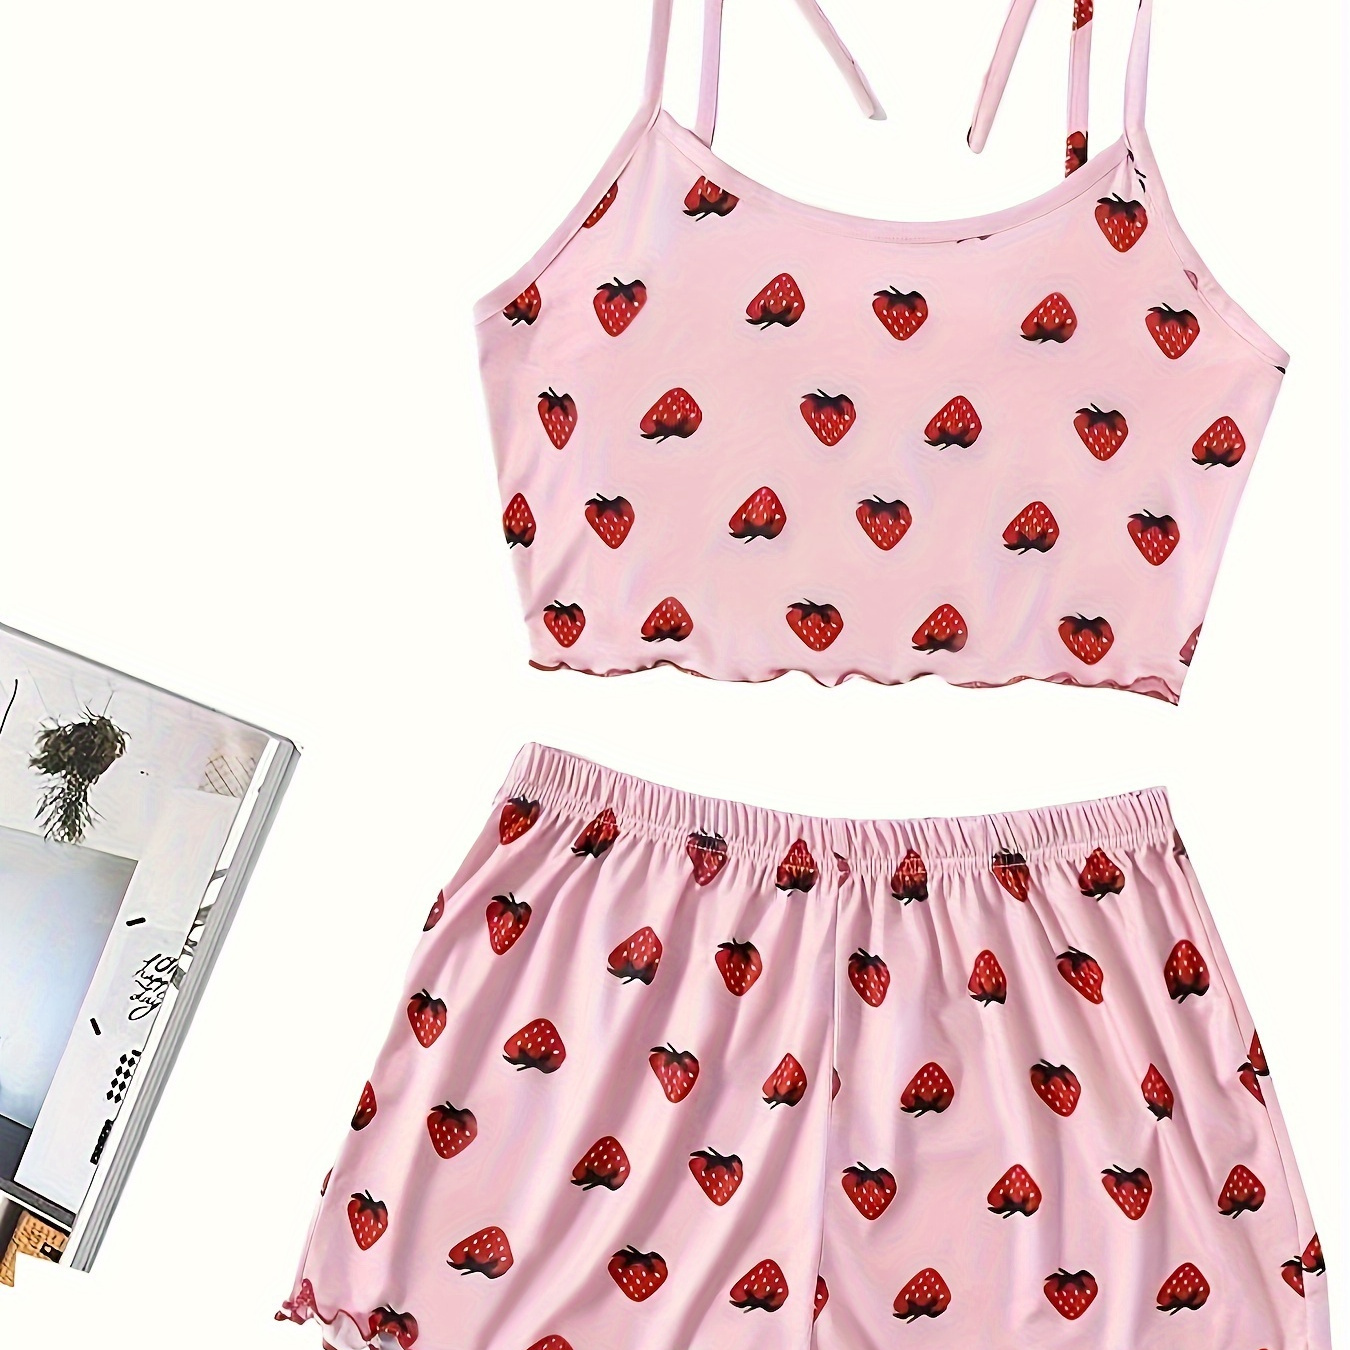 

Strawberry Print Pajama Set, Lace Up Cami Top & Lettuce Trim Shorts, Women's Sleepwear & Loungewear